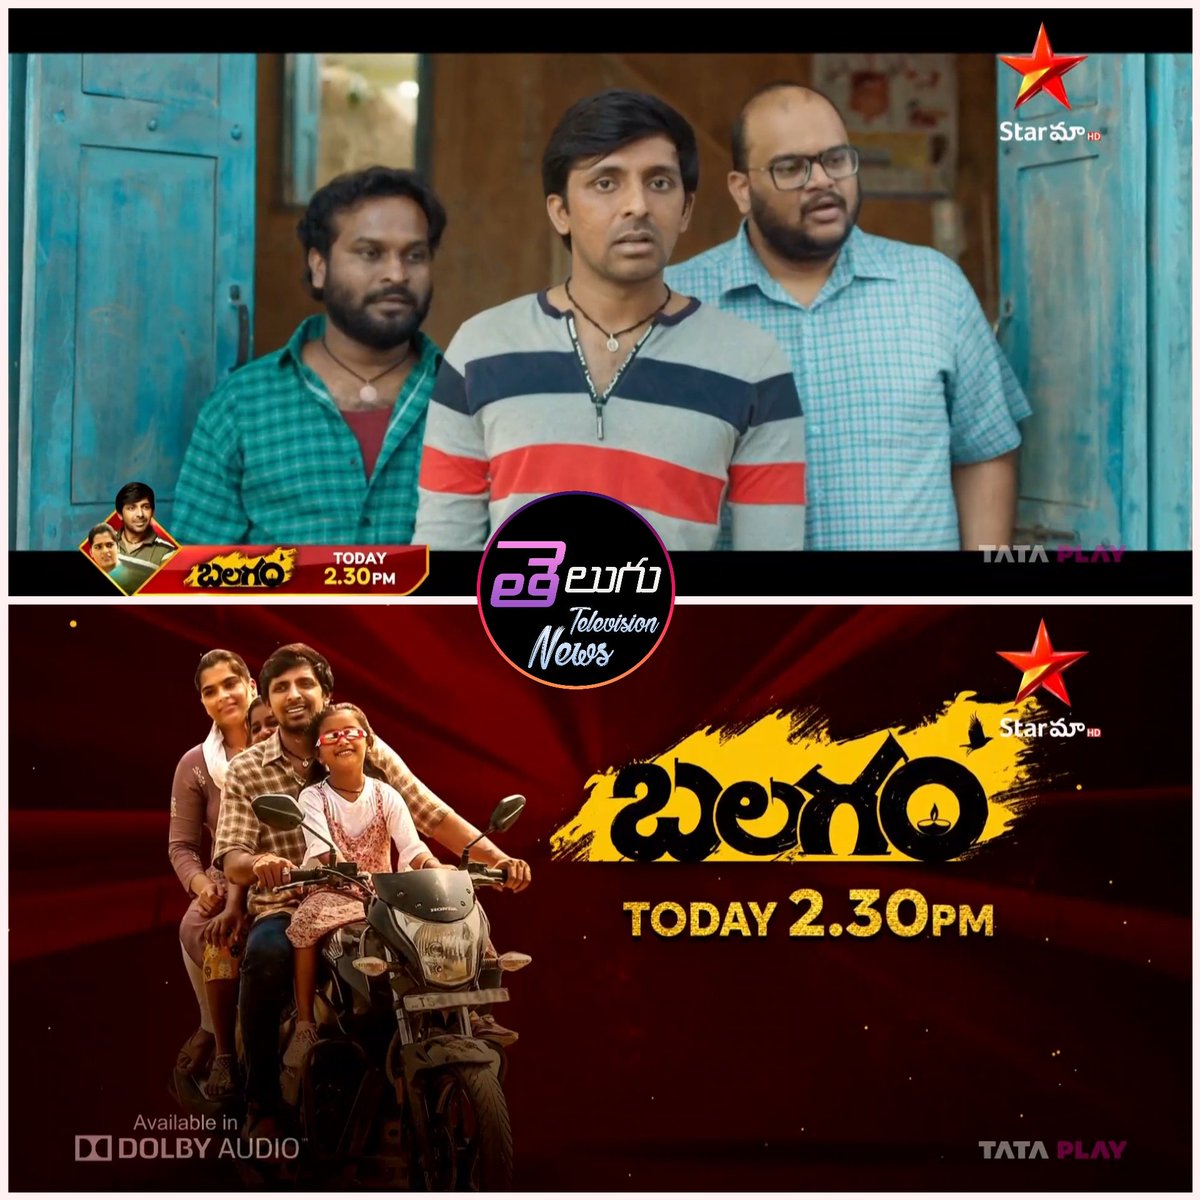 Blockbuster Movie
#Balagam
Today at 2.30pm on #StarMaa
#BalagamOnStarMaa

@VenuYeldandi9 @PriyadarshiPN @kavyakalyanram @dopvenu @LyricsShyam @DilRajuProdctns @HR_3555  @WallsAndTrends